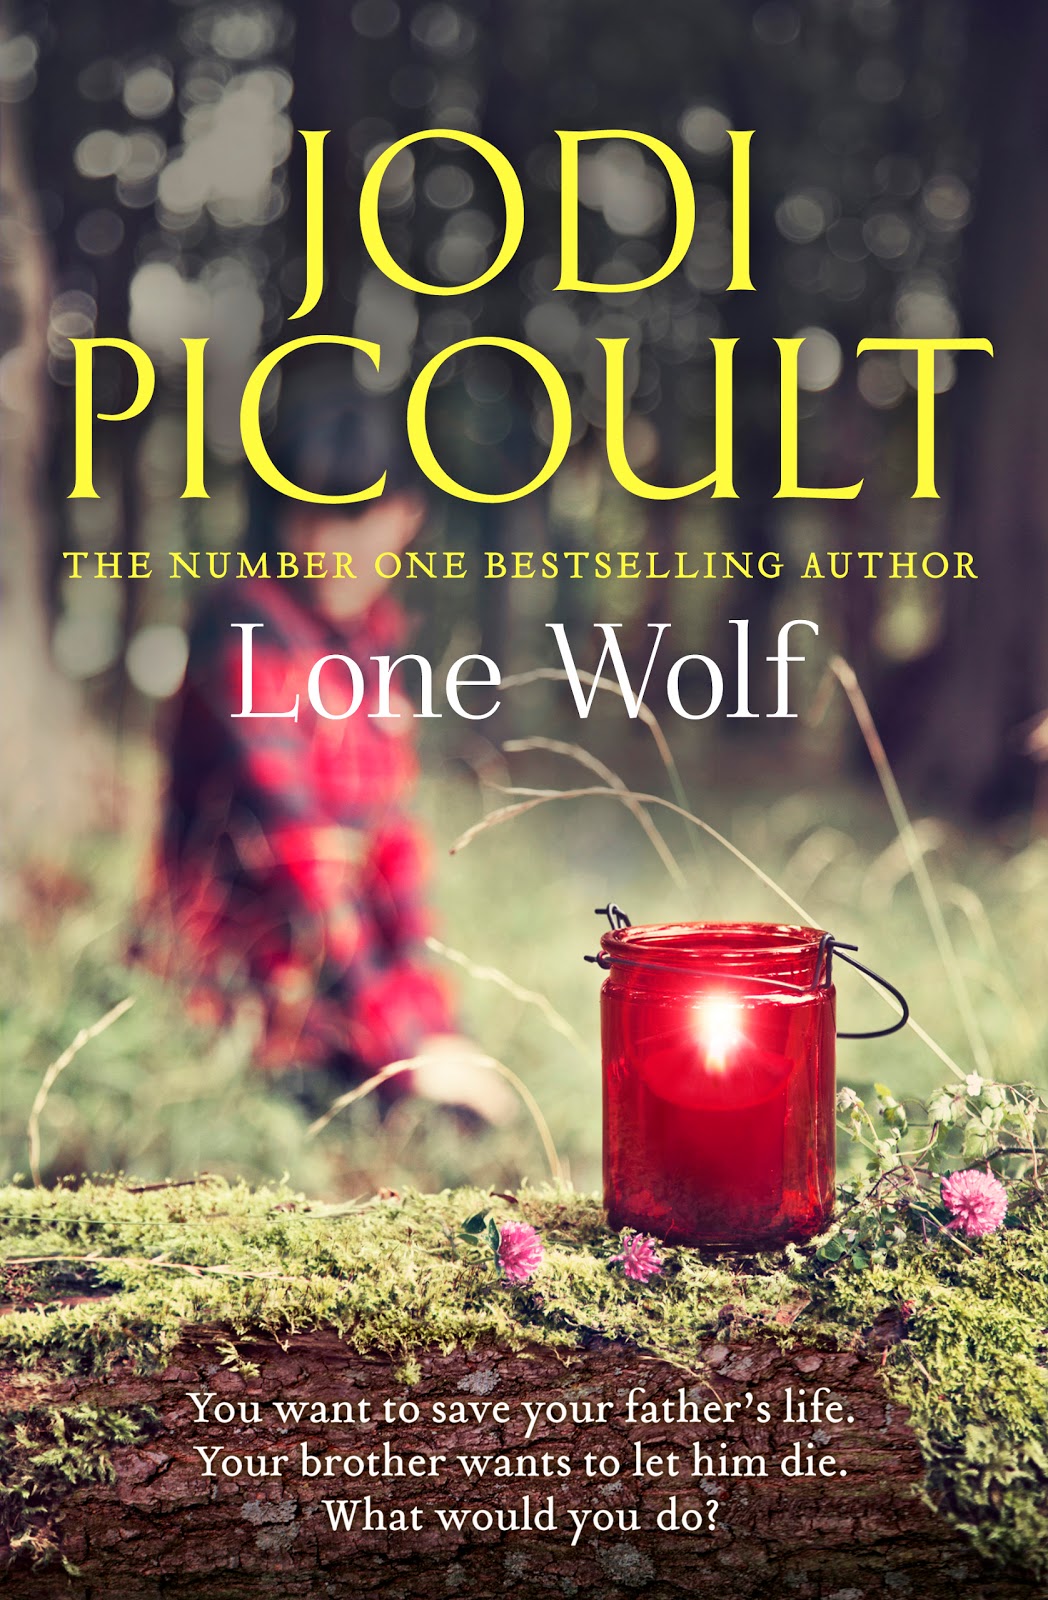 Film Vs Book Cover For Jodi Picoult S New Book Lone Wolf